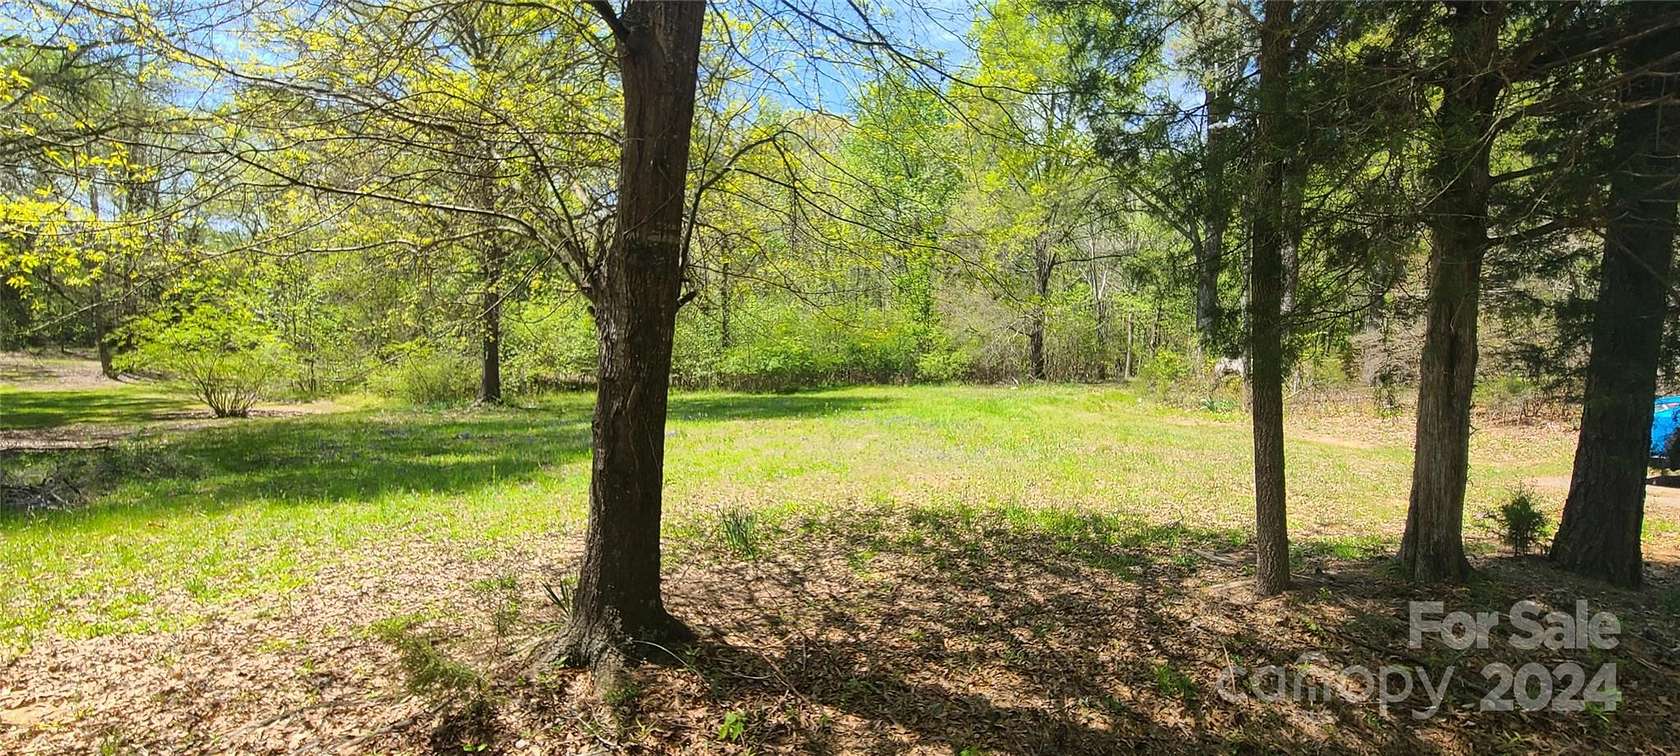 0.53 Acres of Land for Sale in Lancaster, South Carolina